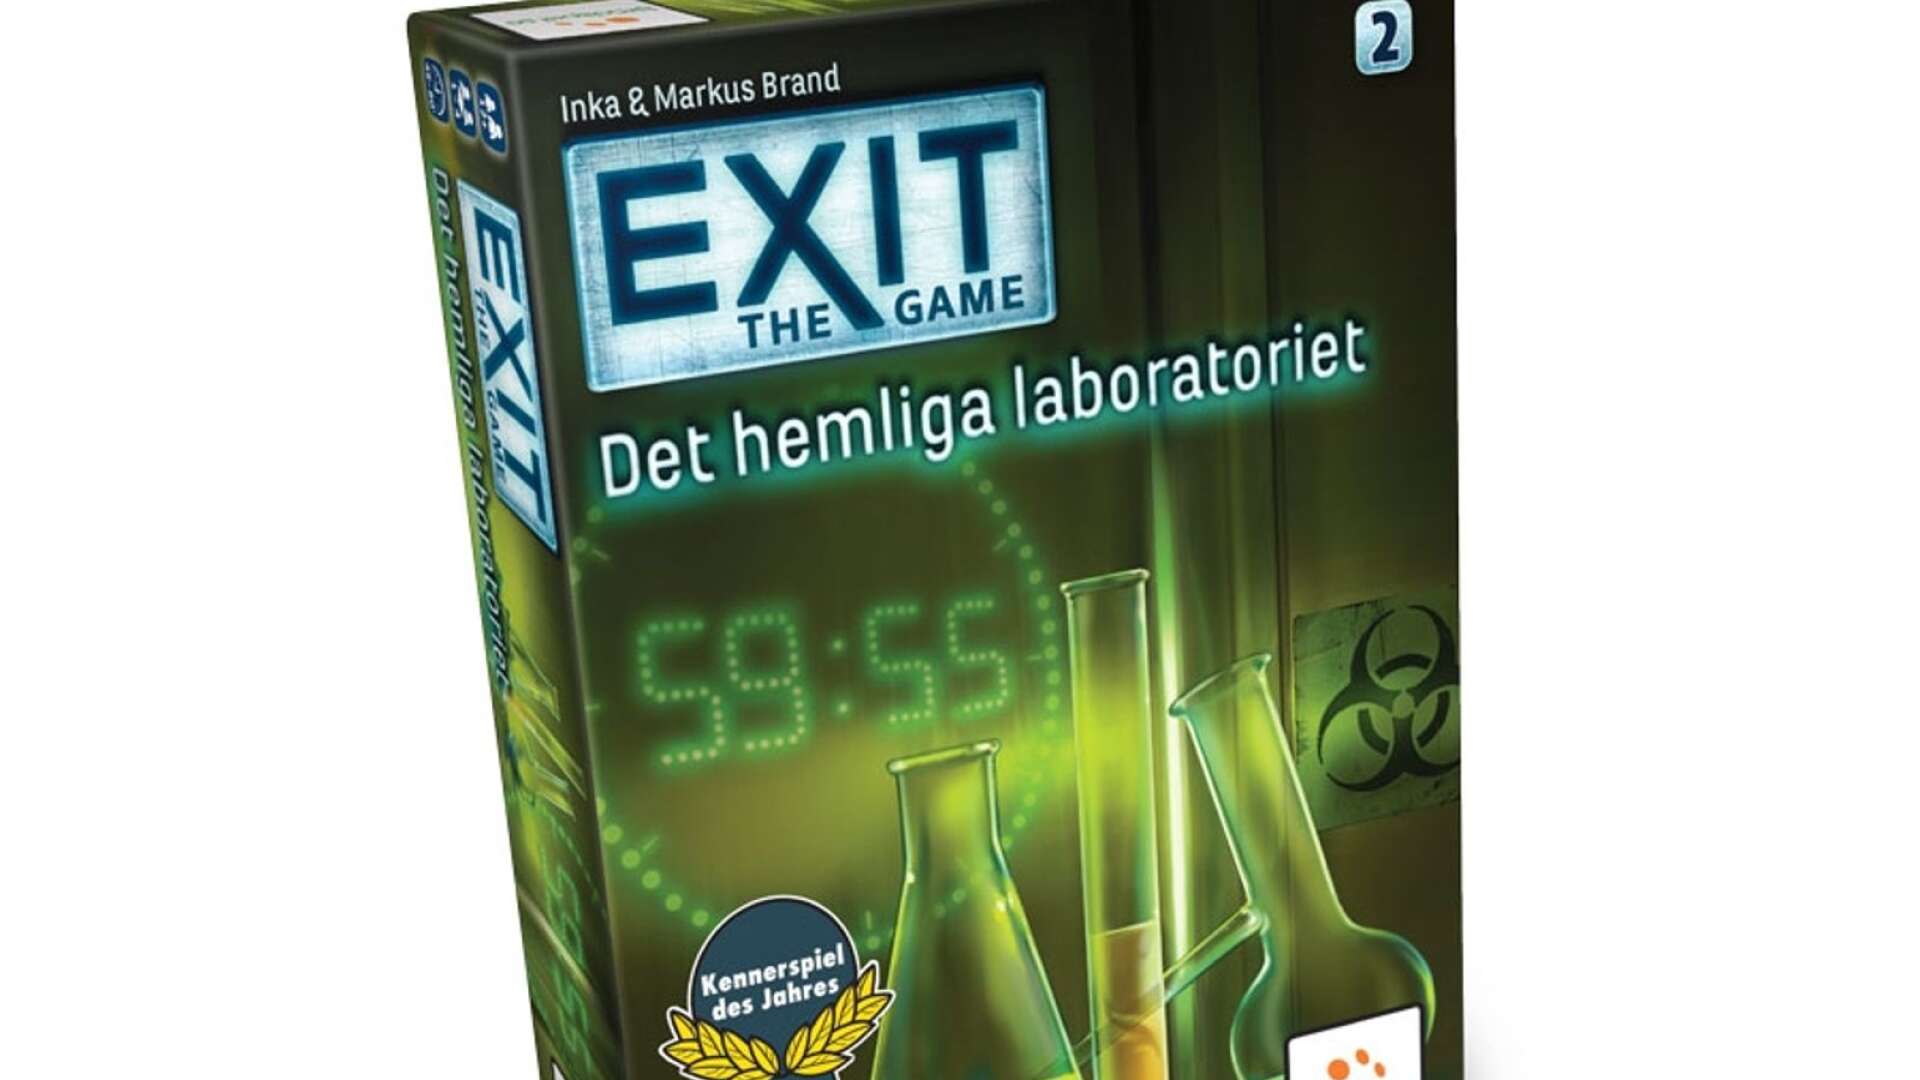 Exit the game: Det hemliga laboratoriet